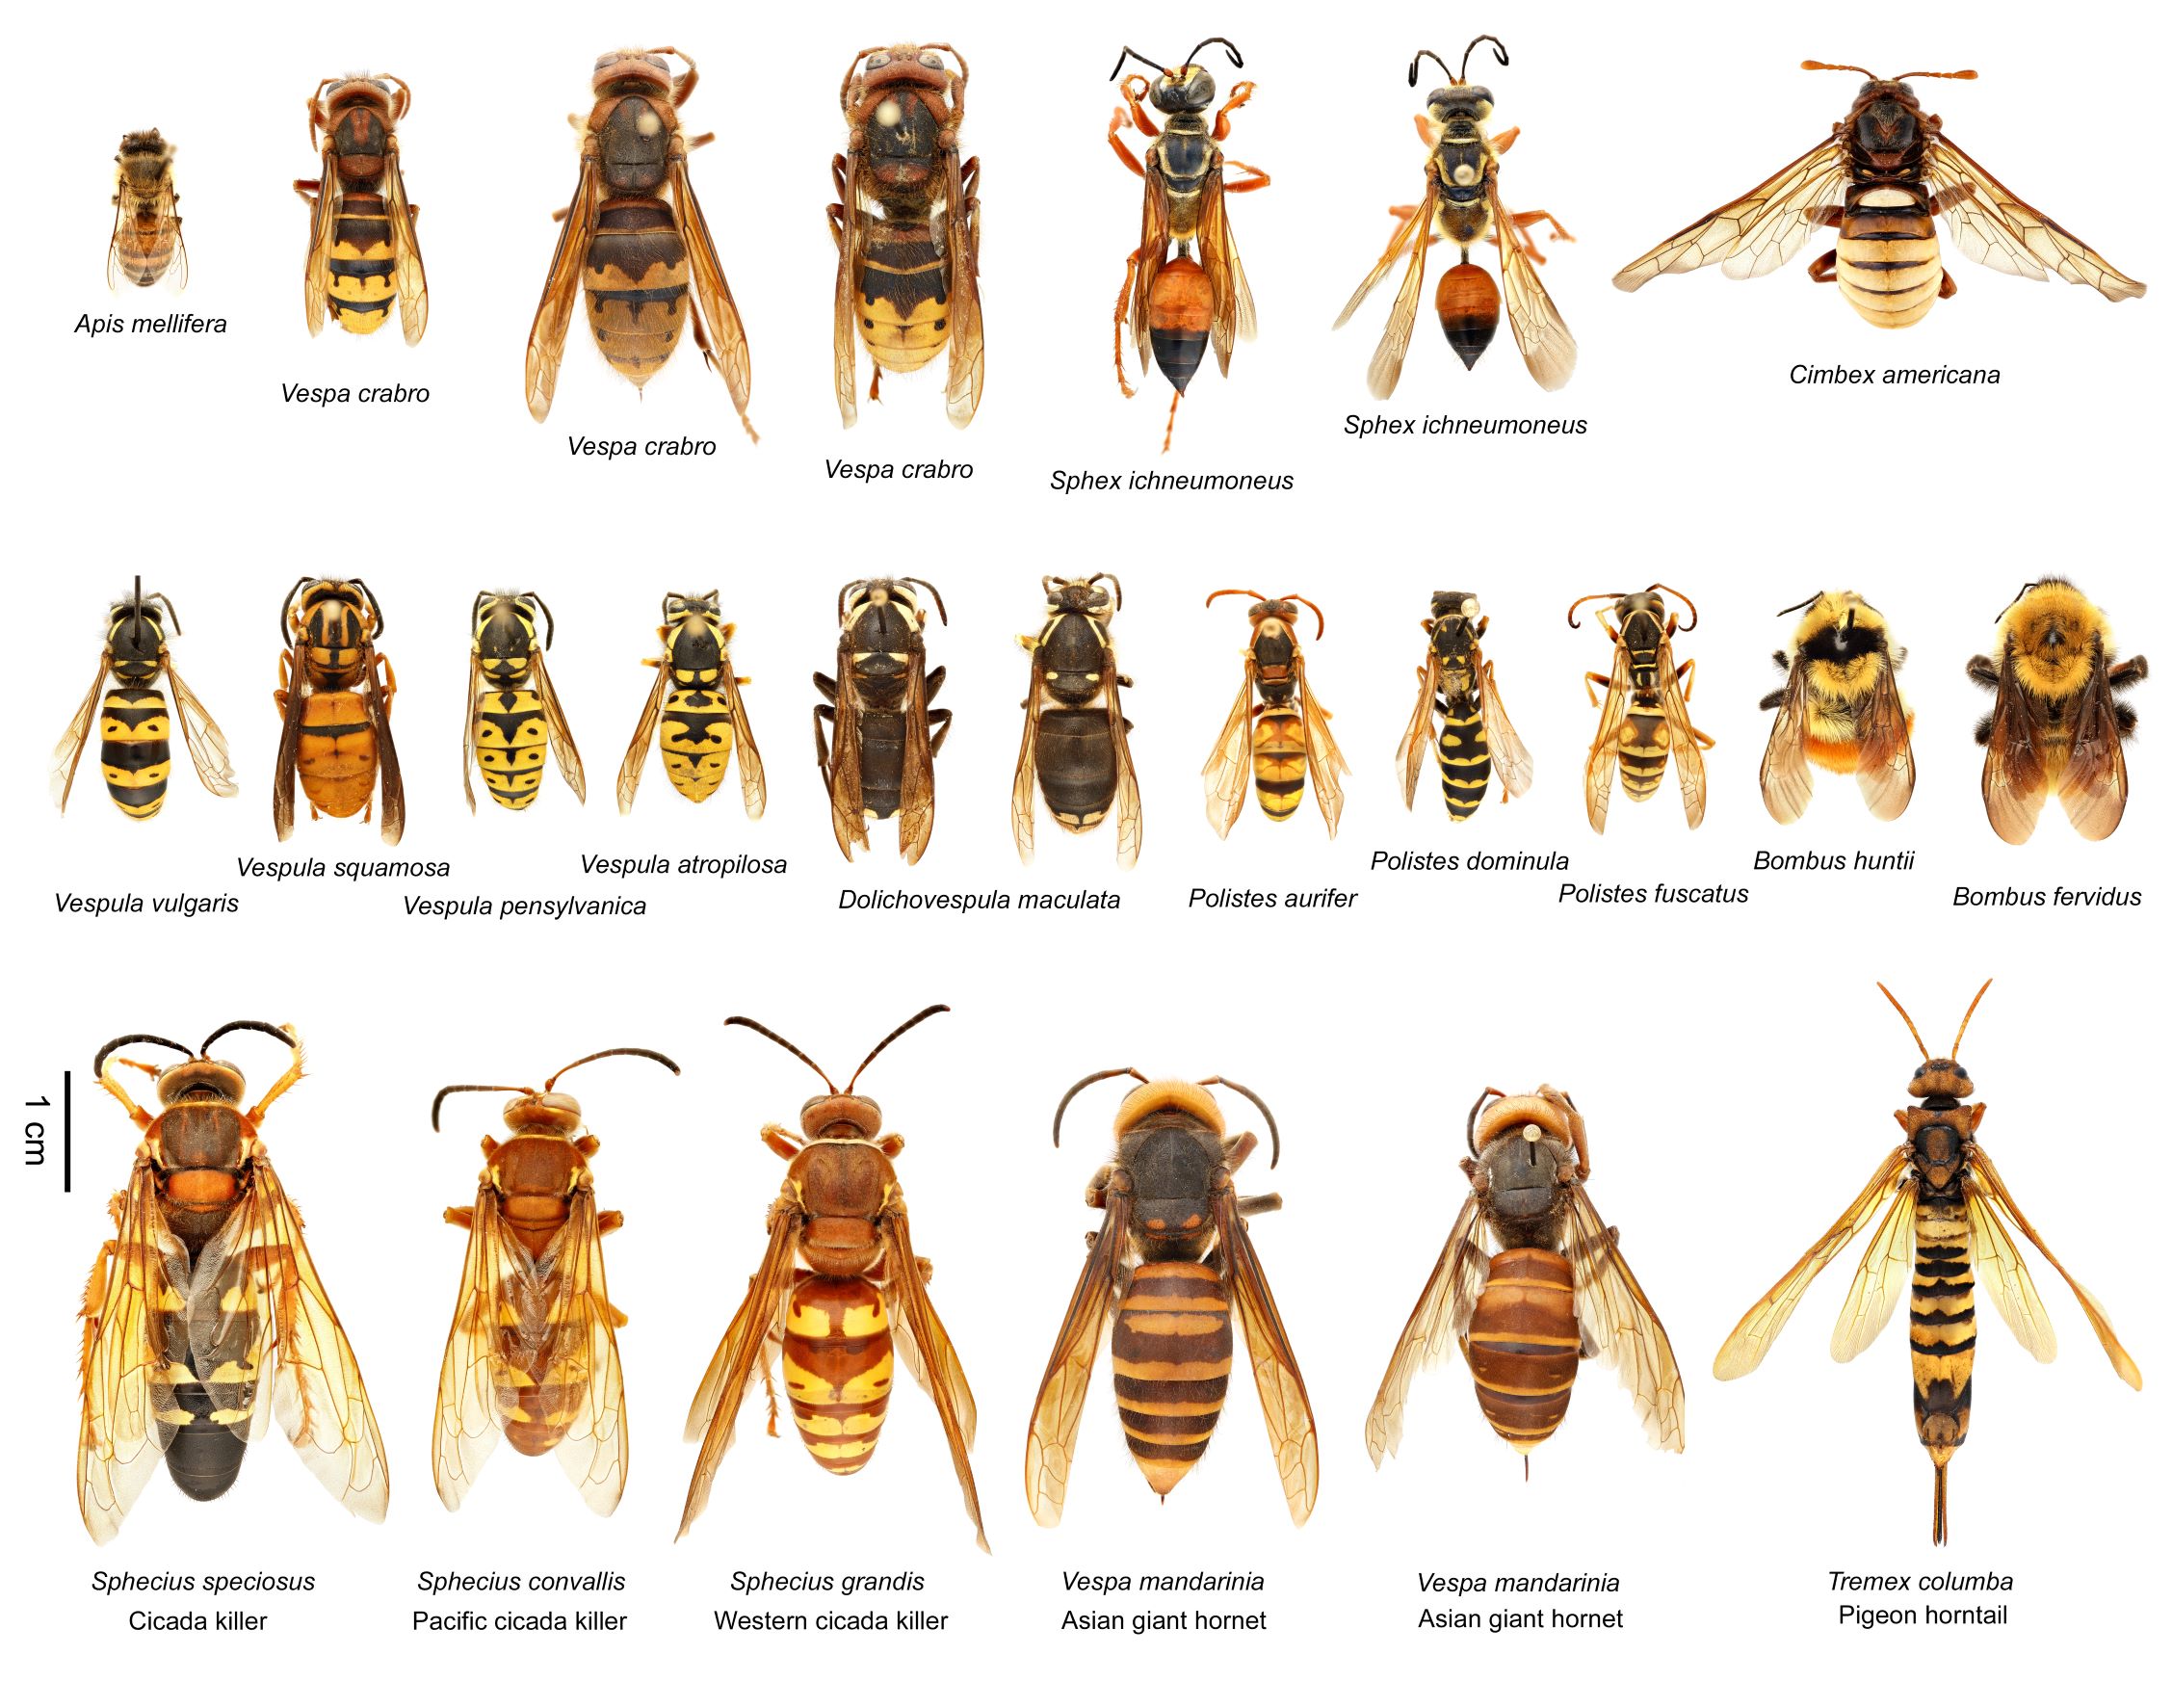 asian-giant-hornet-texas-apiary-inspection-service-tais